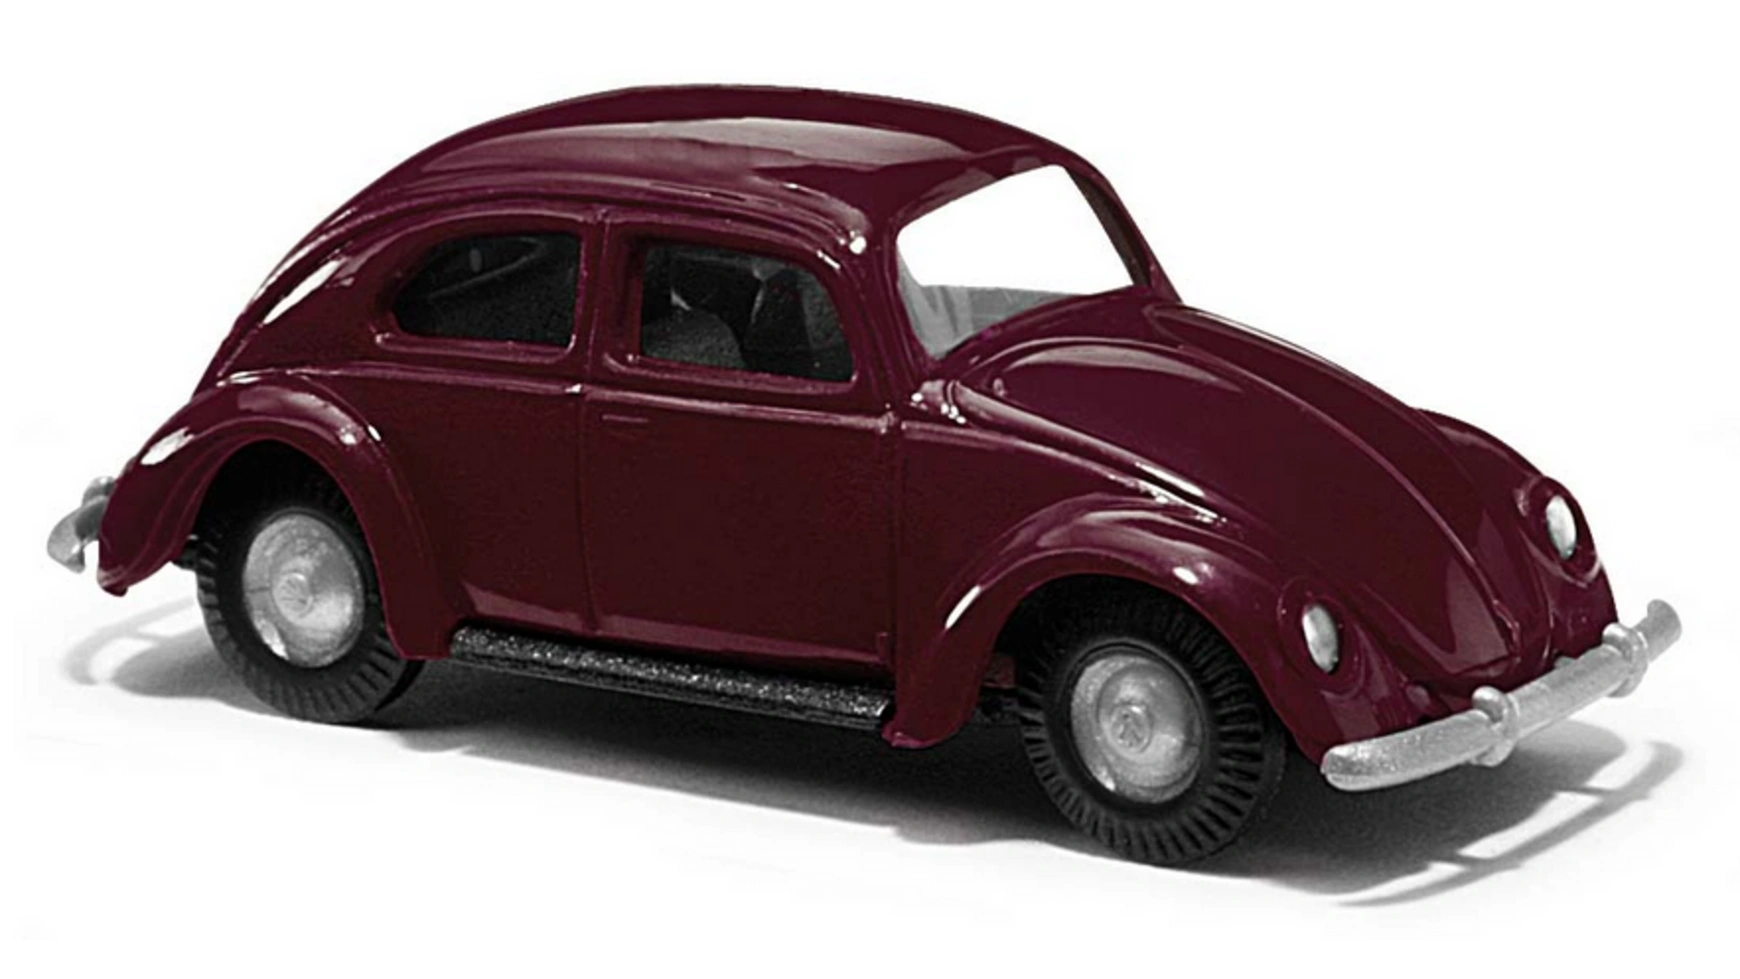 Busch Modellspielwaren 1:87 Комплект: VW Beetle, красный carson volkswagen beetle красный 1 87 2 4g 100% rtr